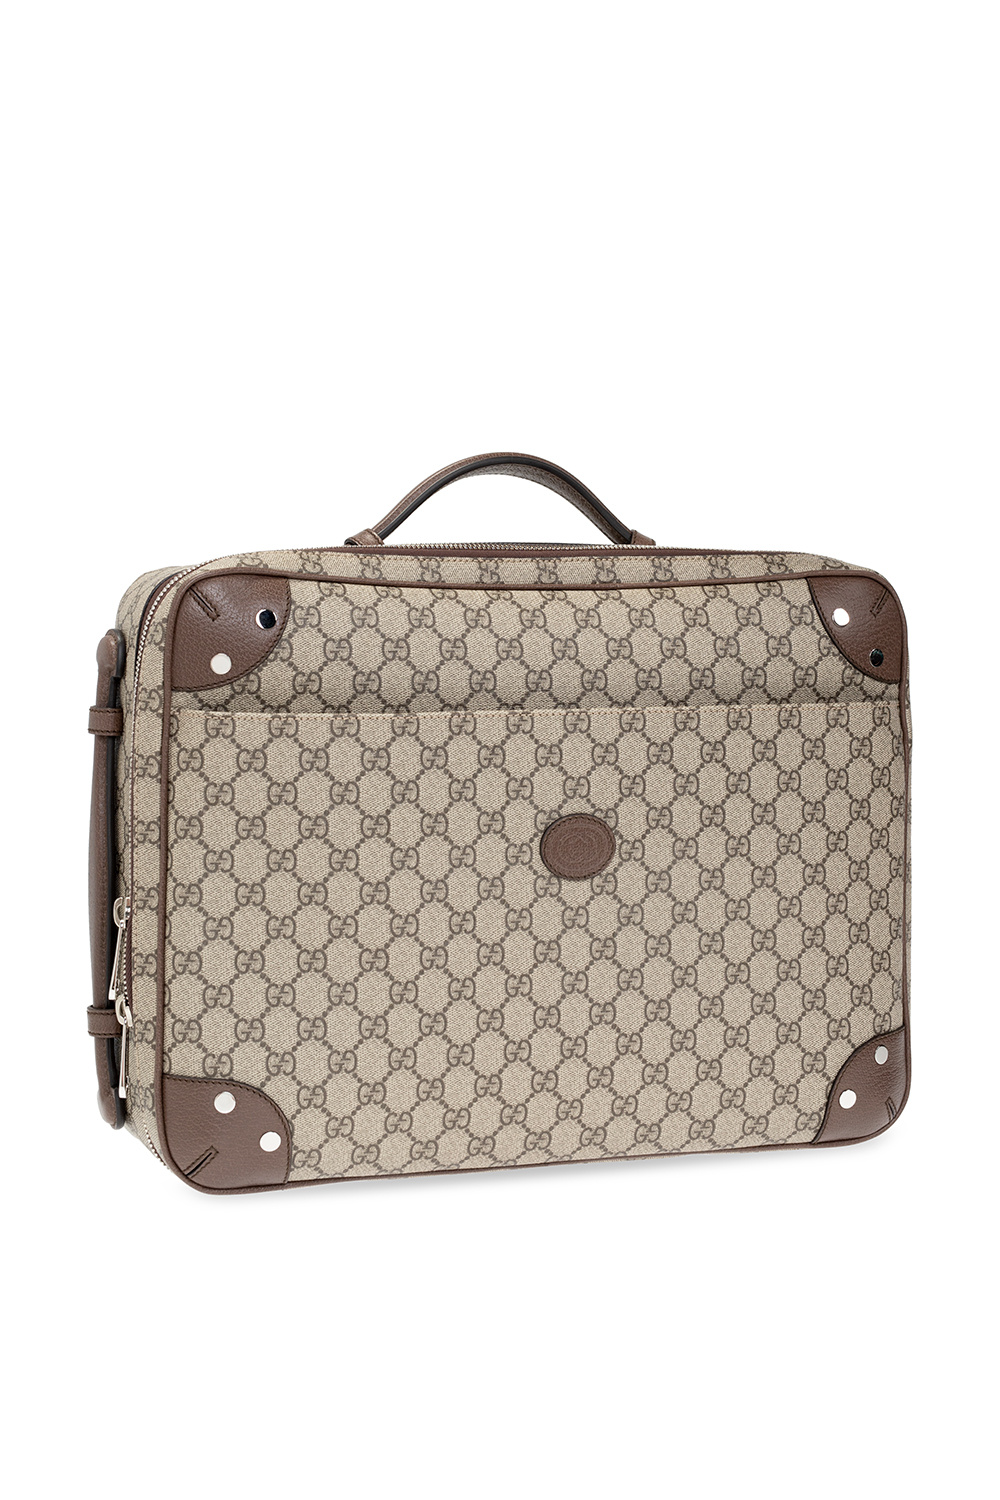 Gucci, Bags, Vintage Gucci Tennis Bag 7s